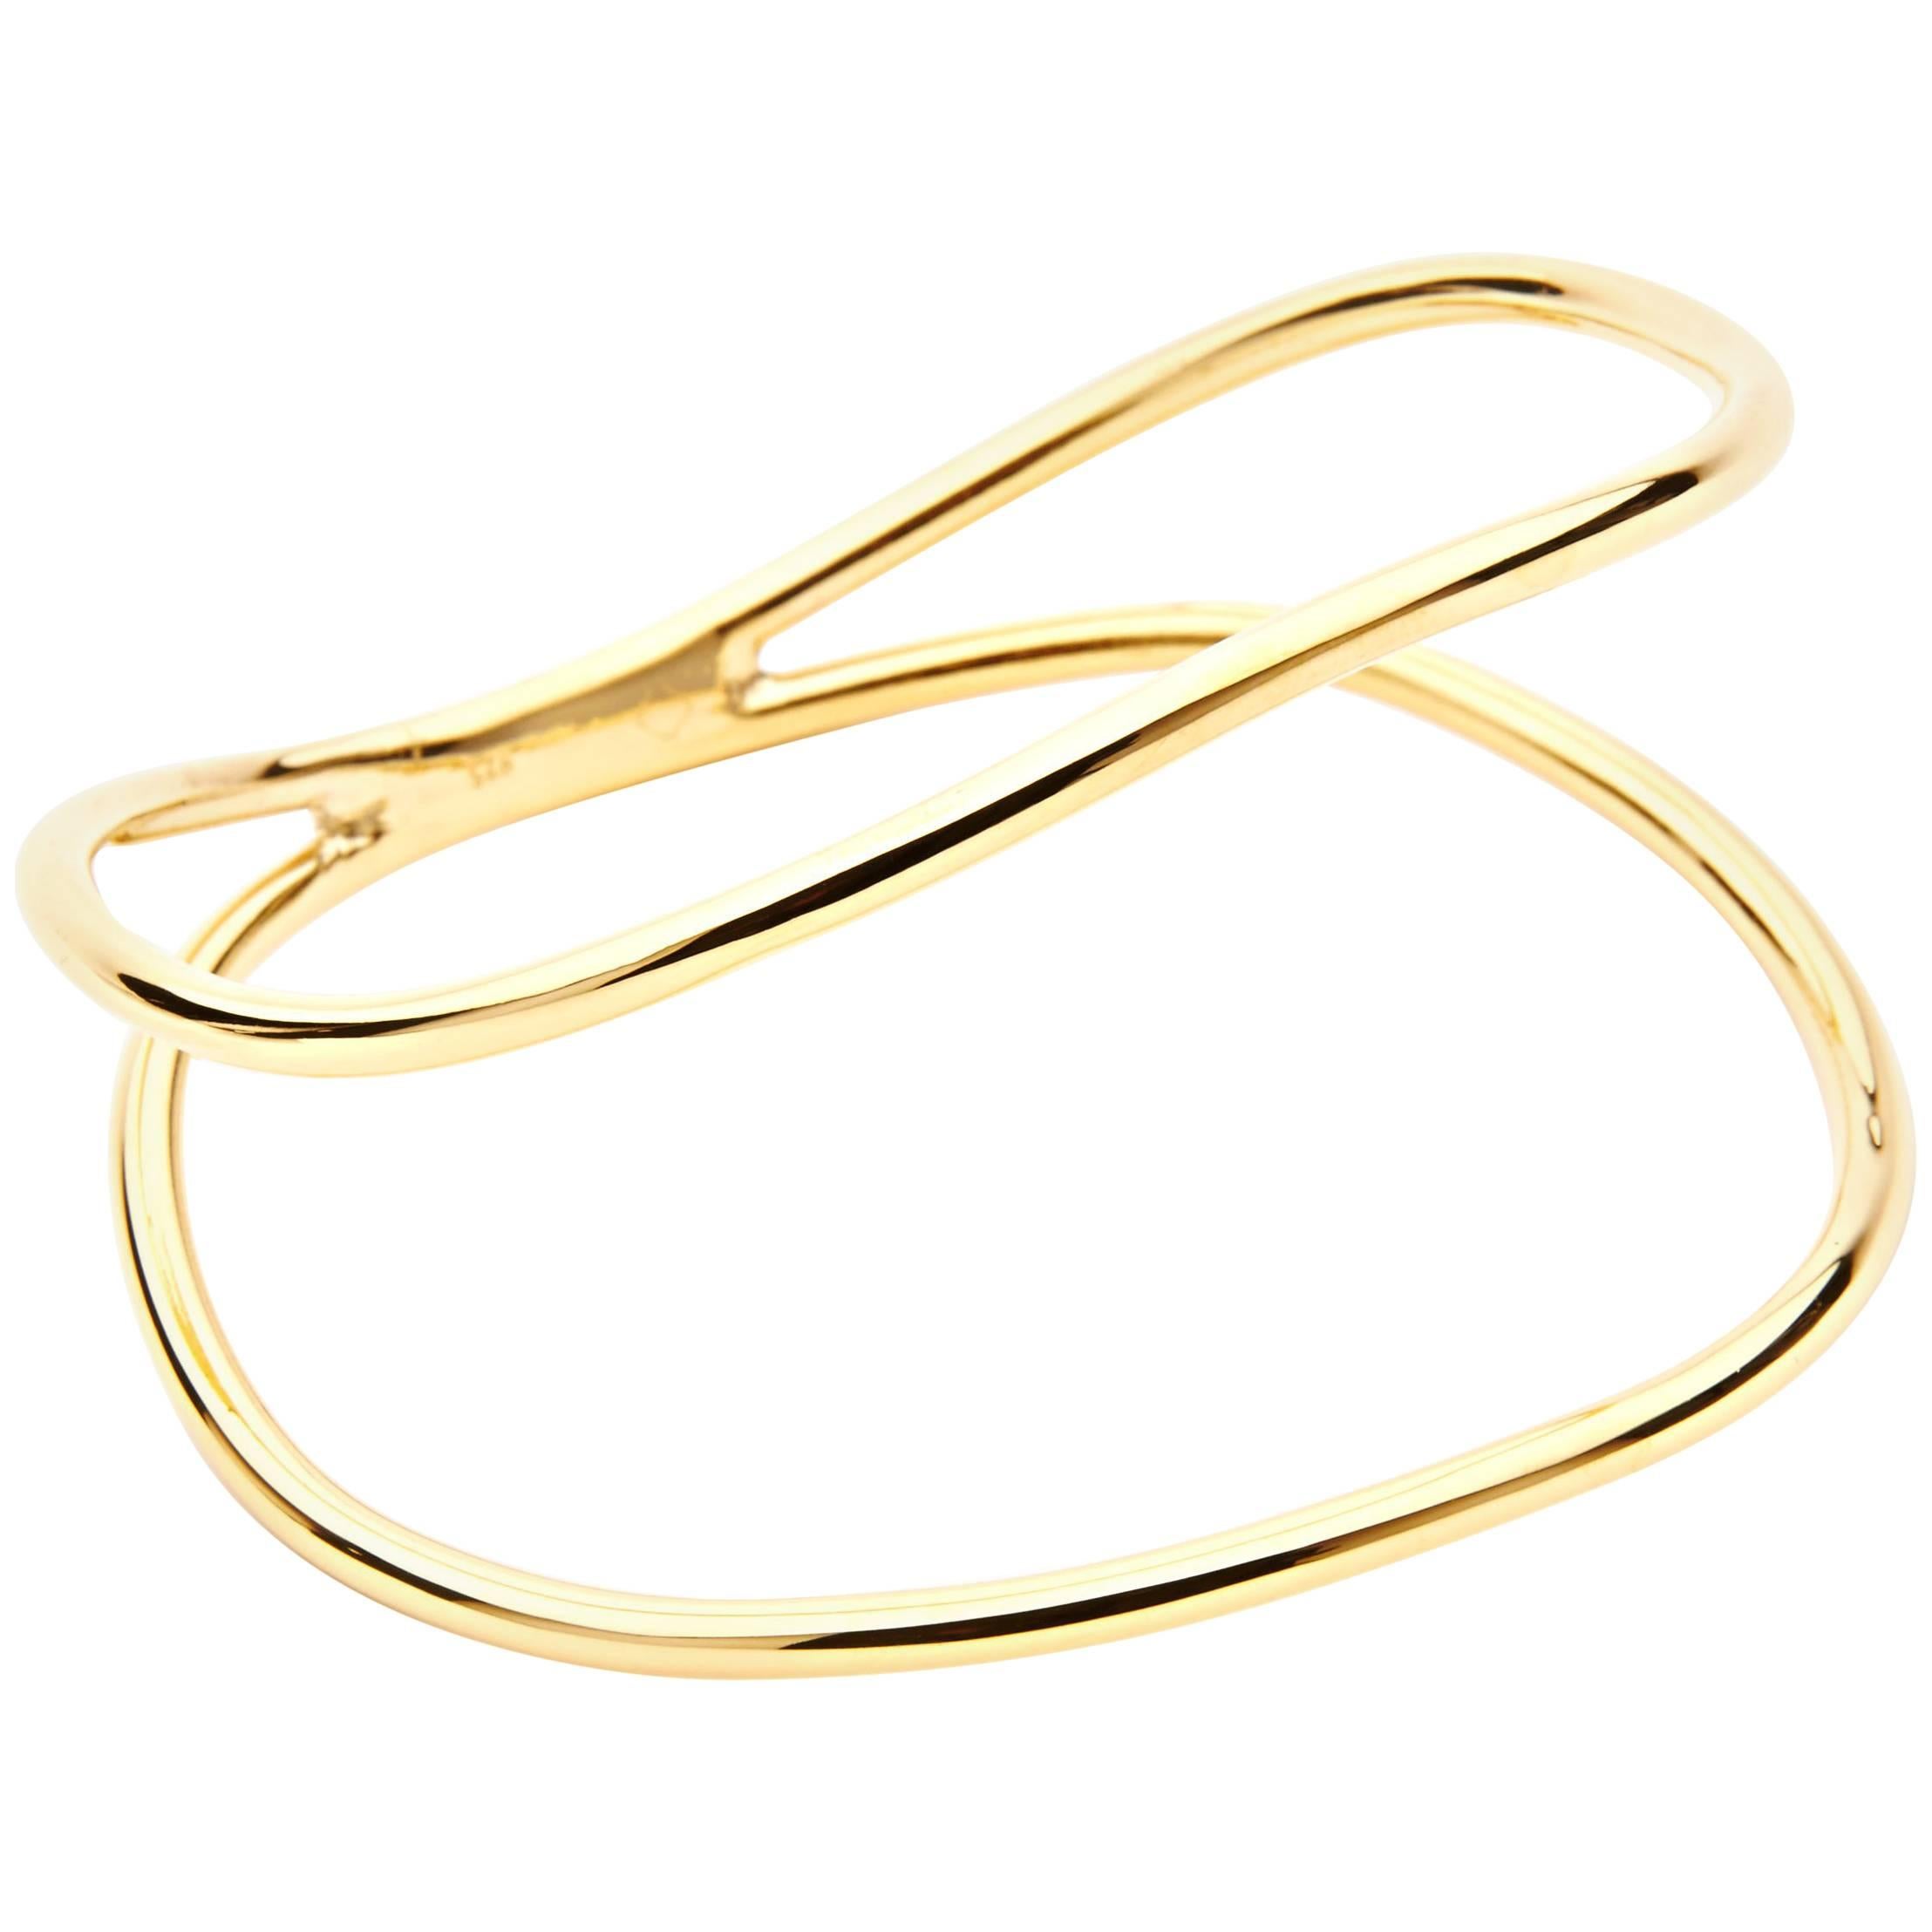 MAVIADA's Double Curved Bracelet 18 Karat Gold Vermeil Stylish Modern Bracelet